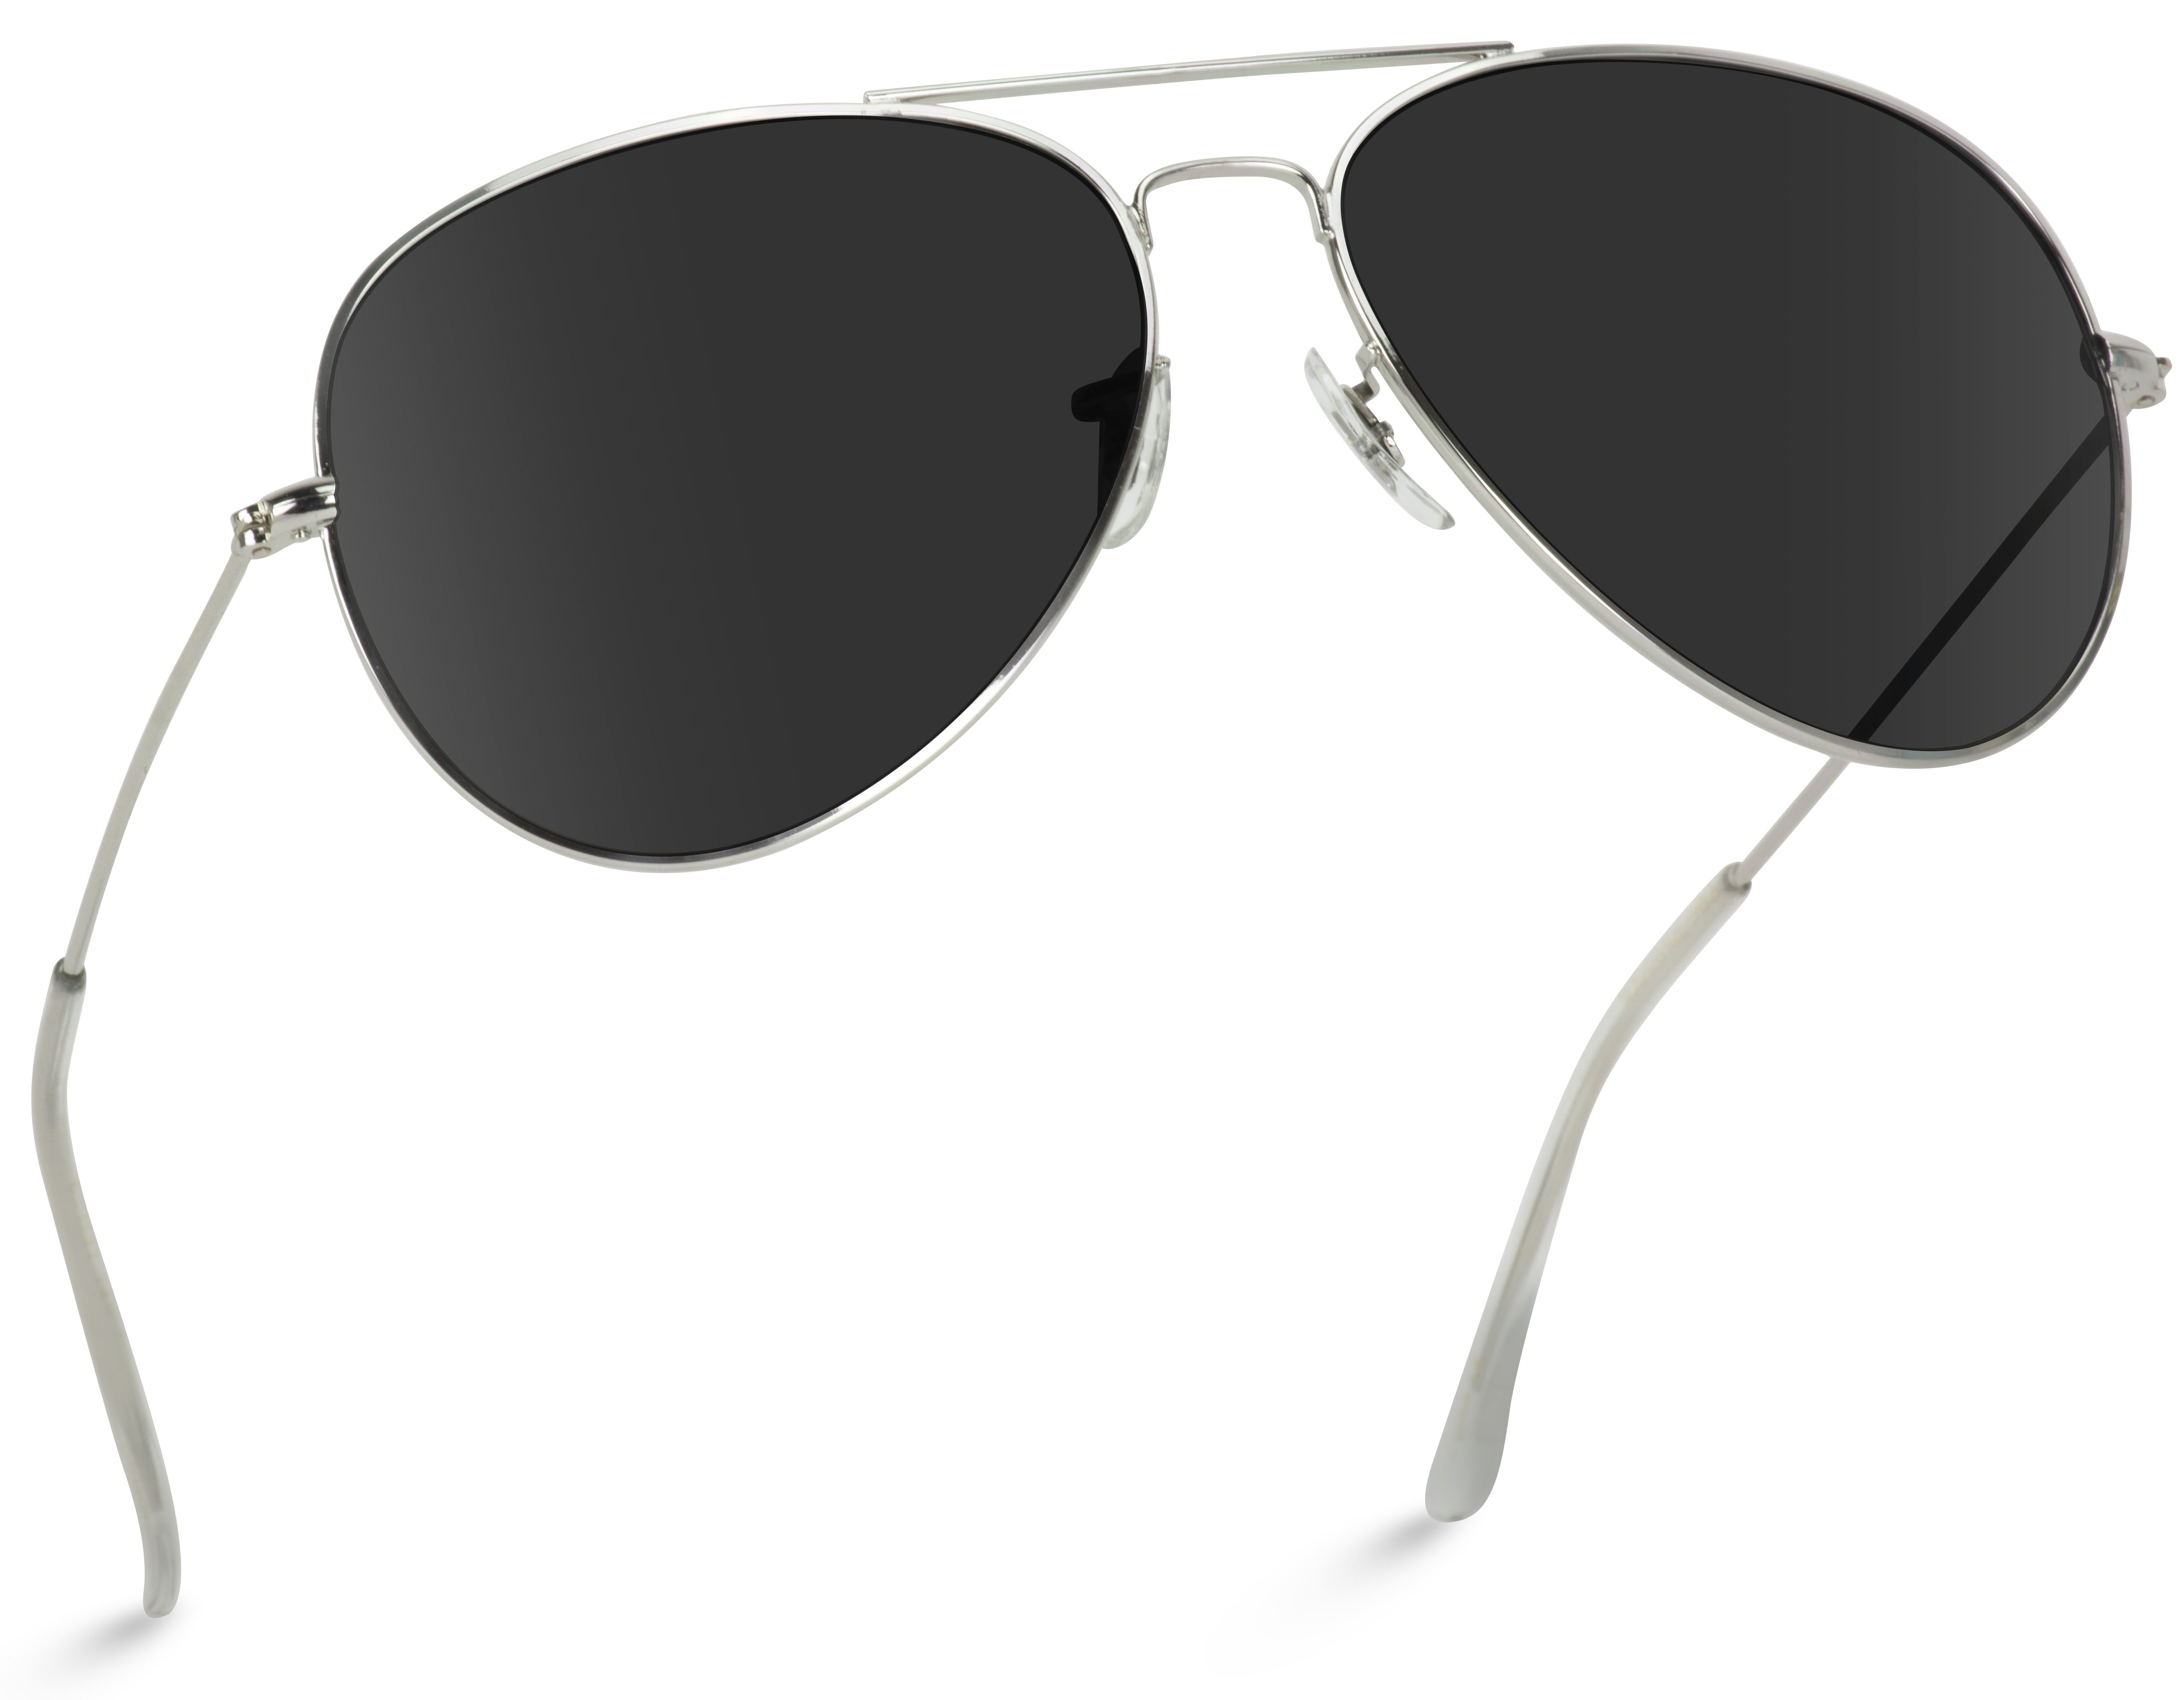 Wholesale Lot 12 Pair Aviator Sunglasses Silver or Black Frame Smoked Lenses